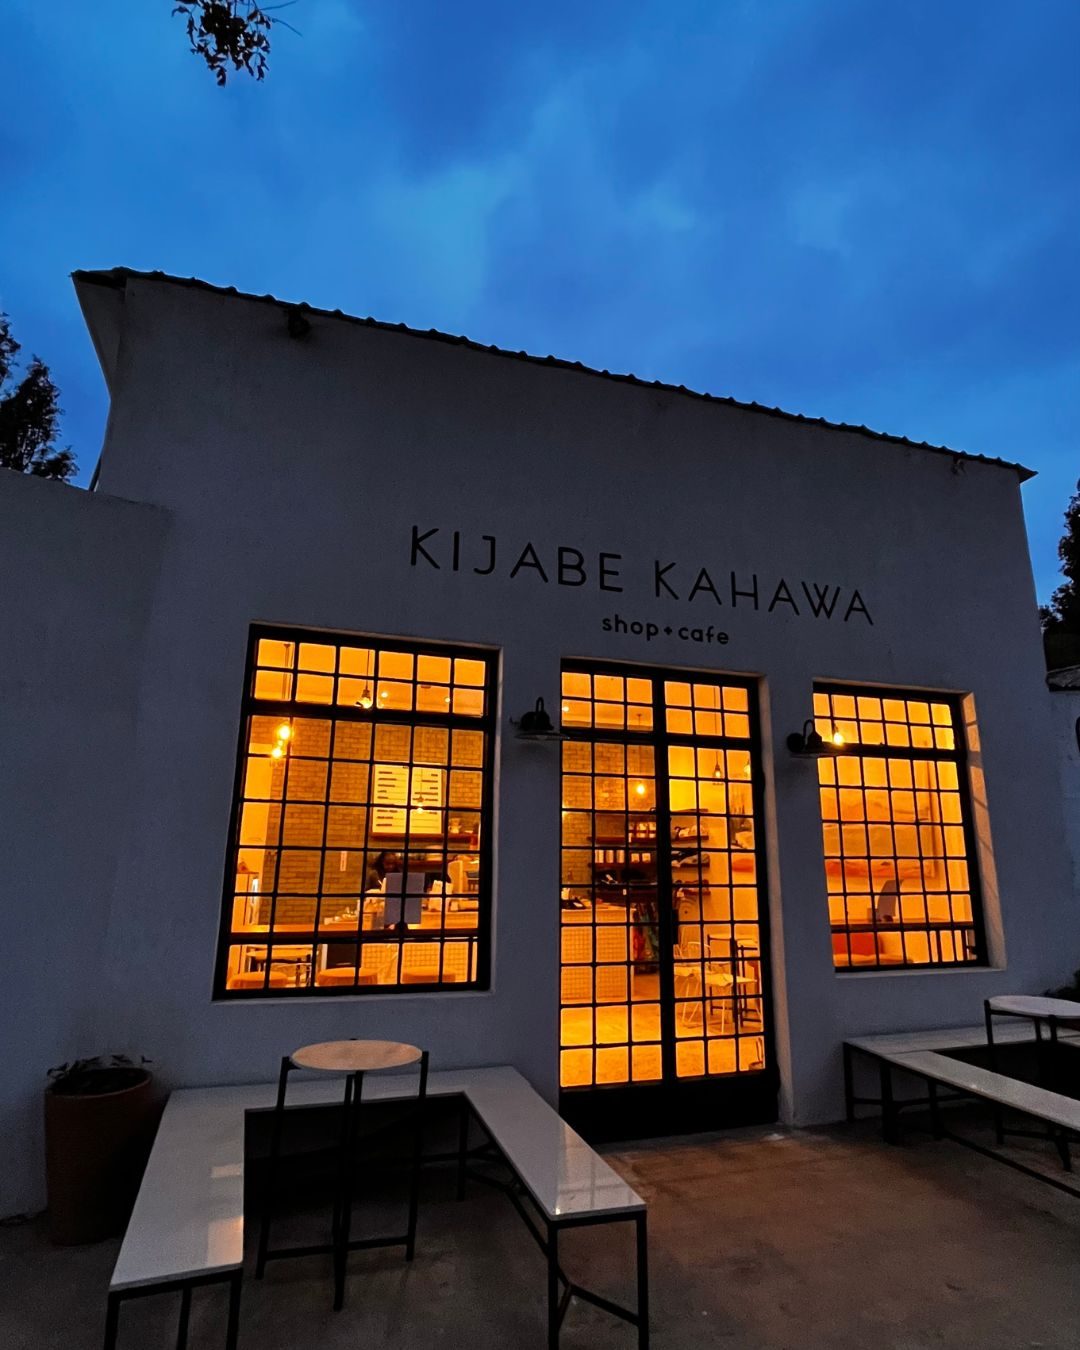 Kijabe Kahawa coffee shop